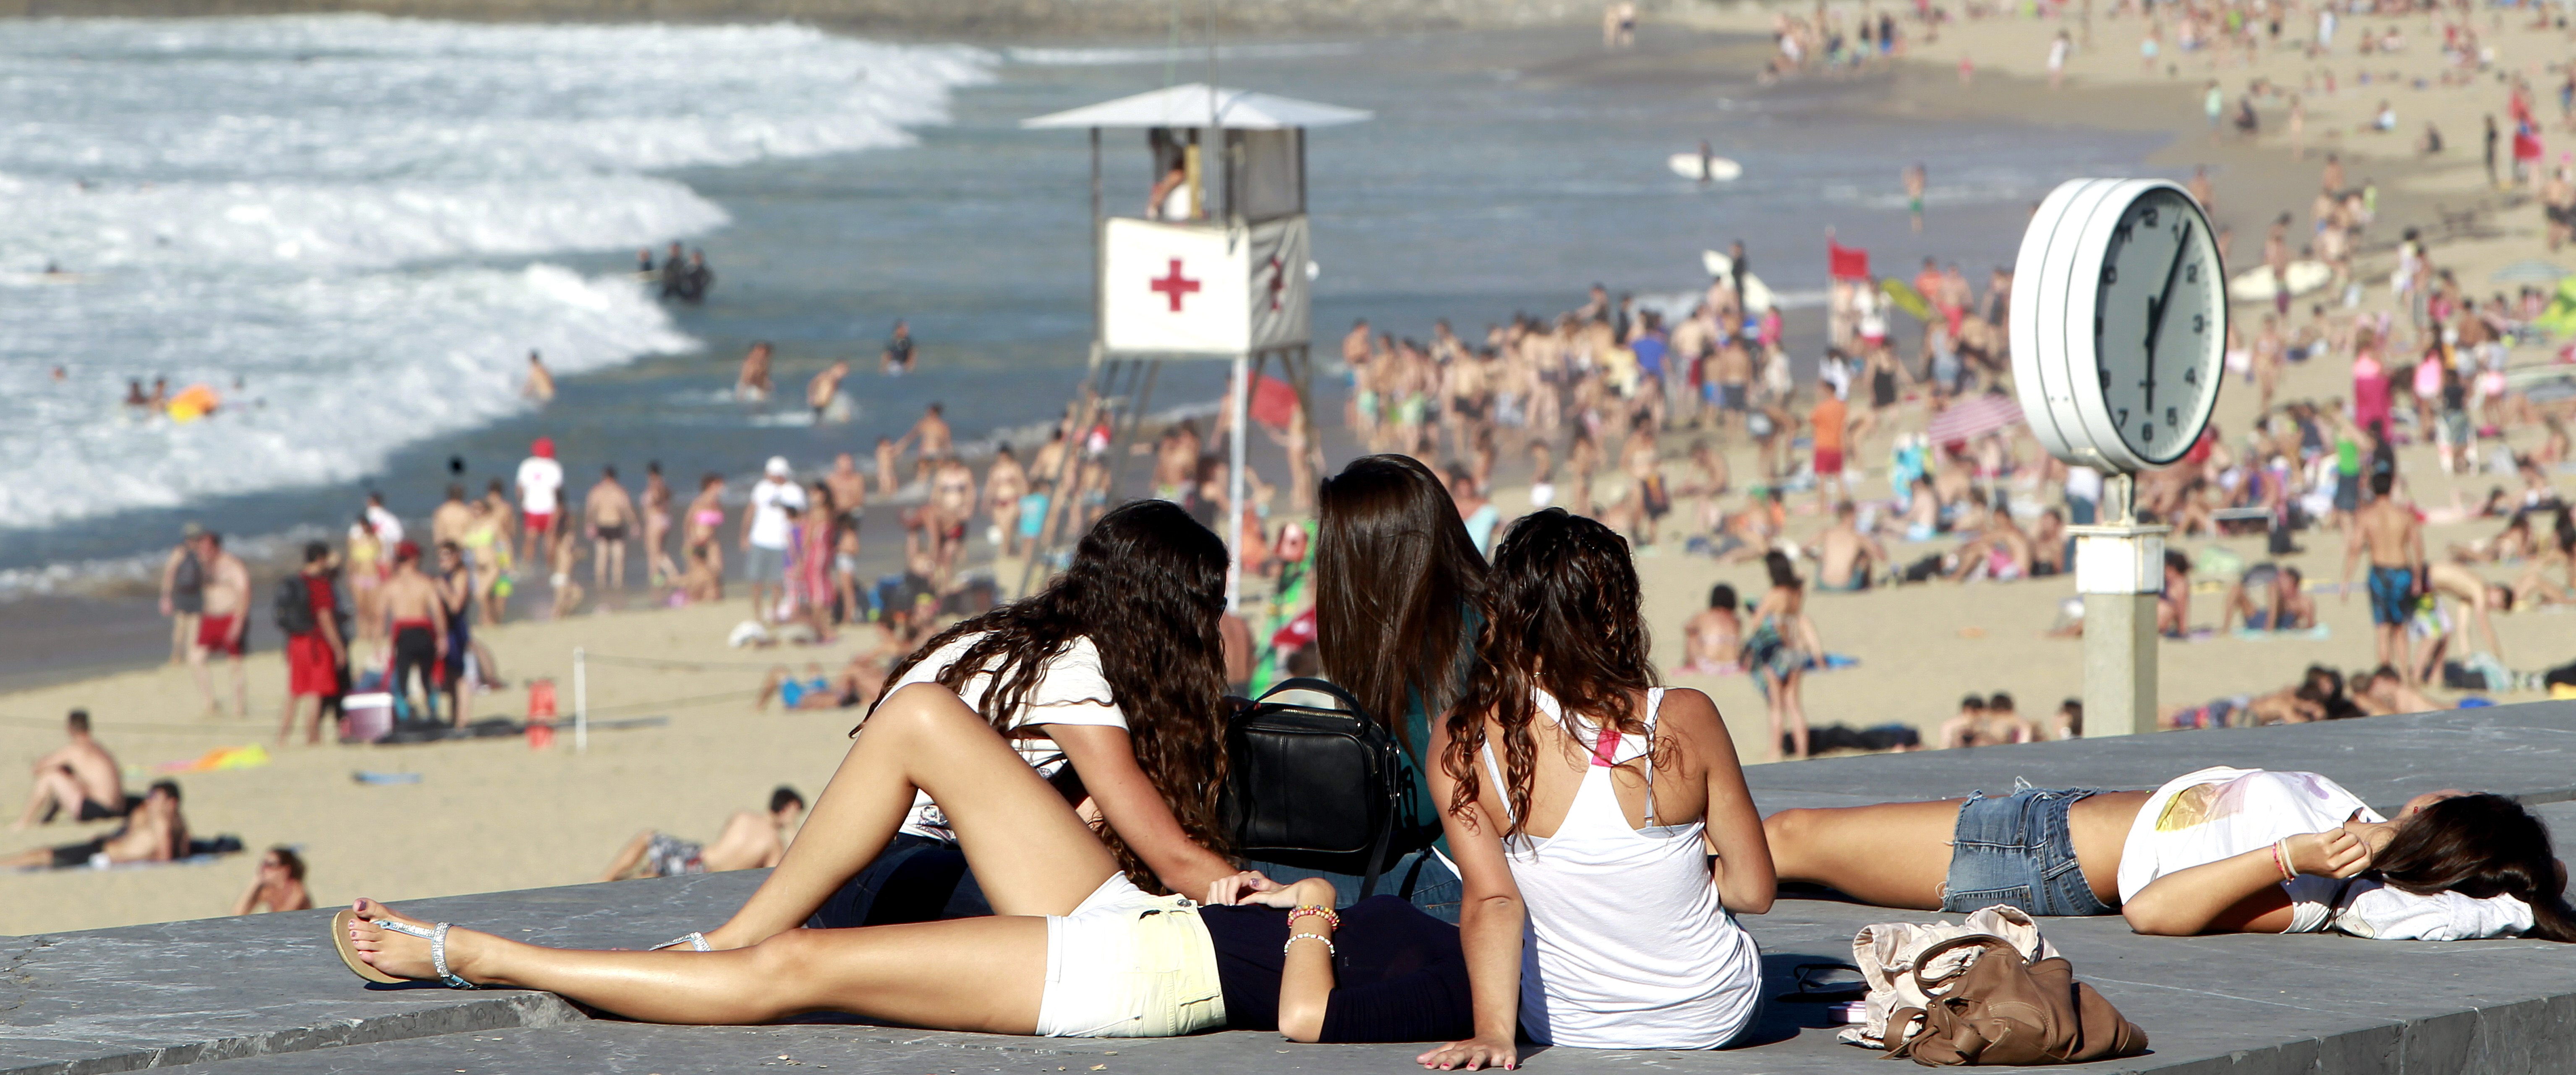 España recibe 42,3 millones de turistas hasta agosto, tras un verano récord